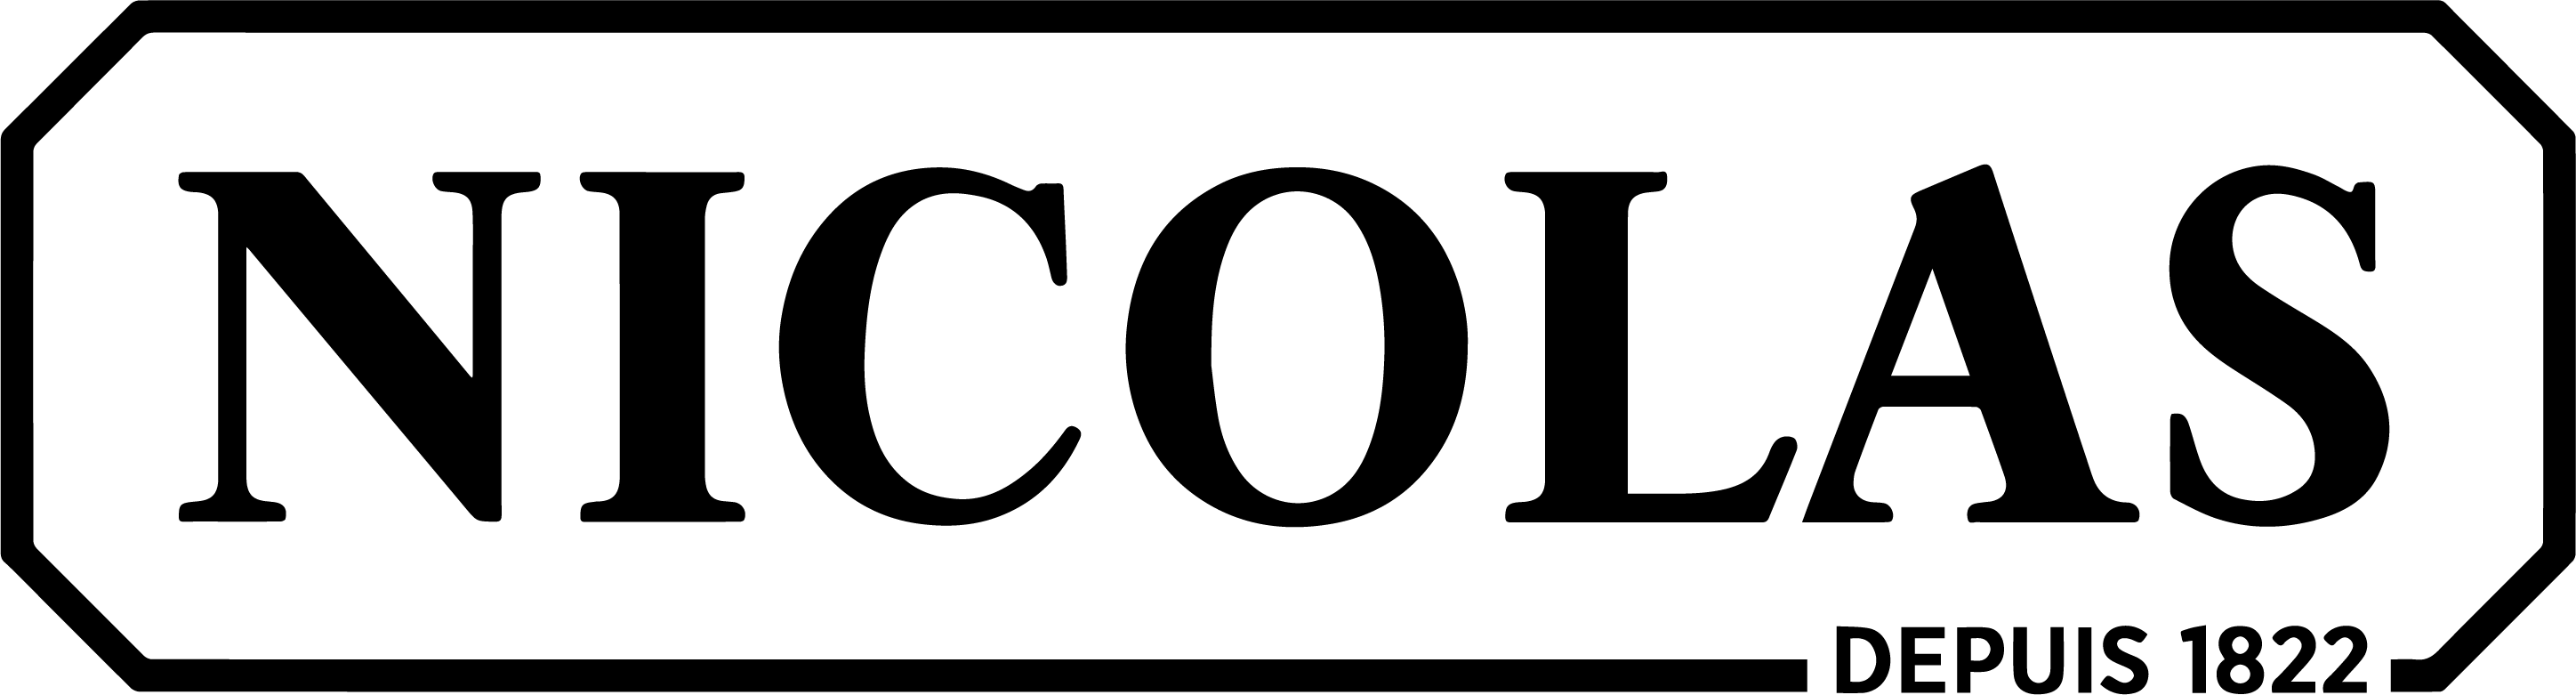 Archive logo - Nicolas